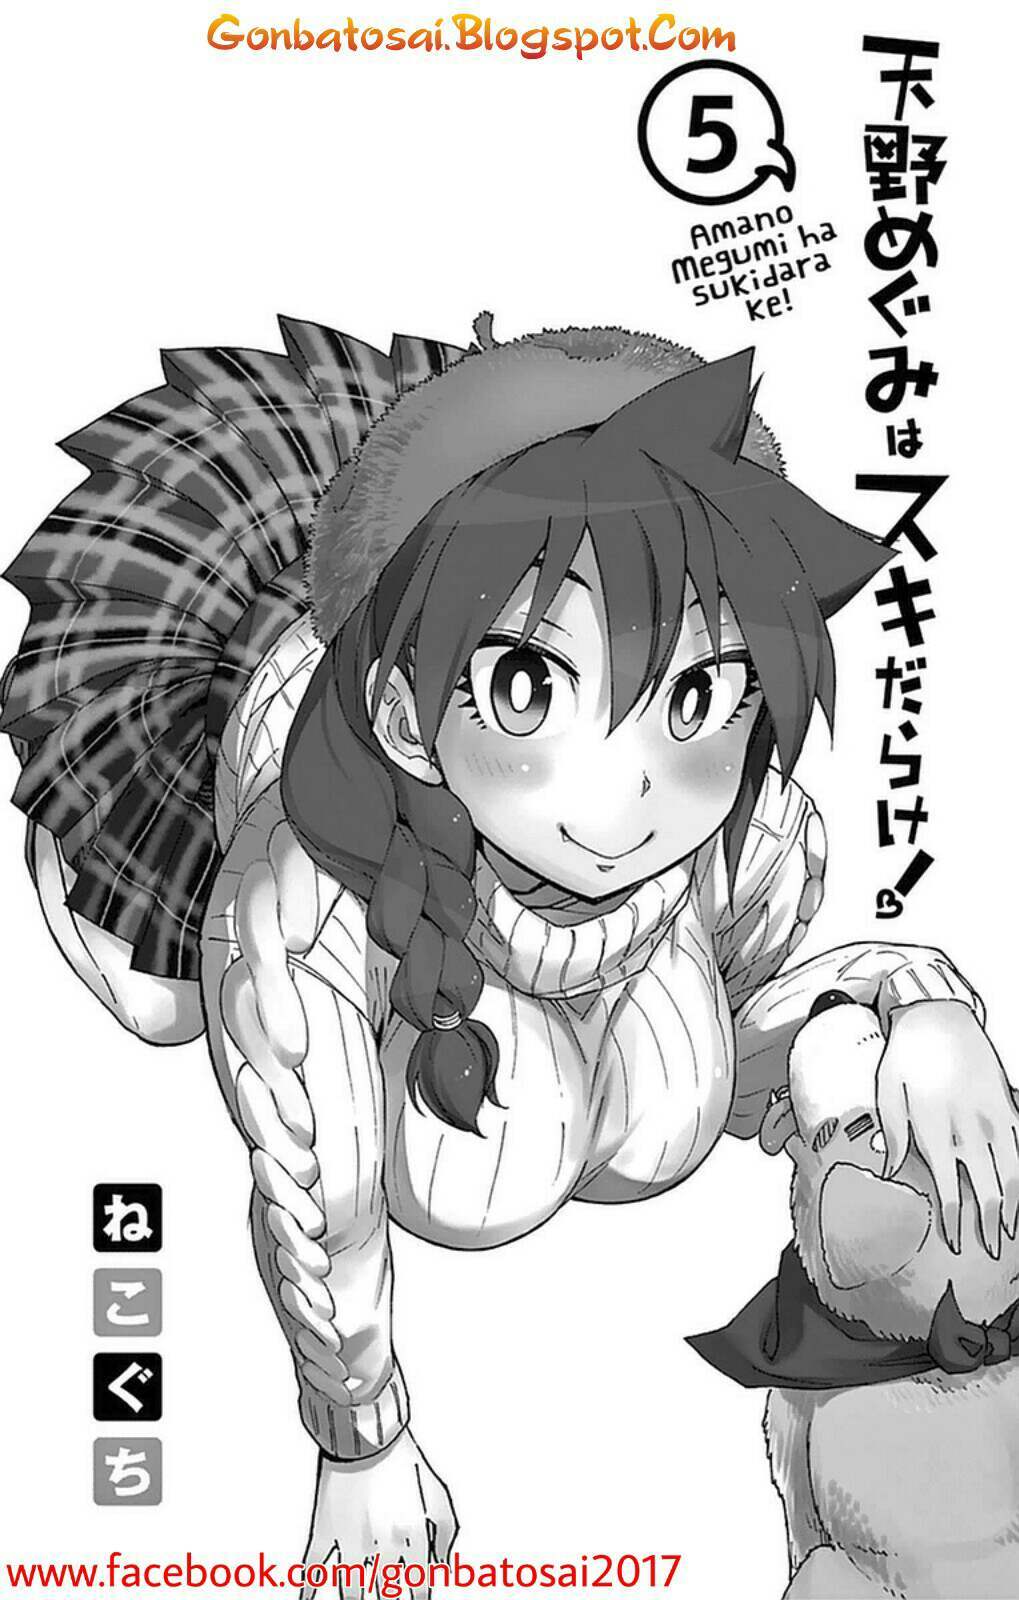 Amano Megumi wa Sukidarake! Chapter 40